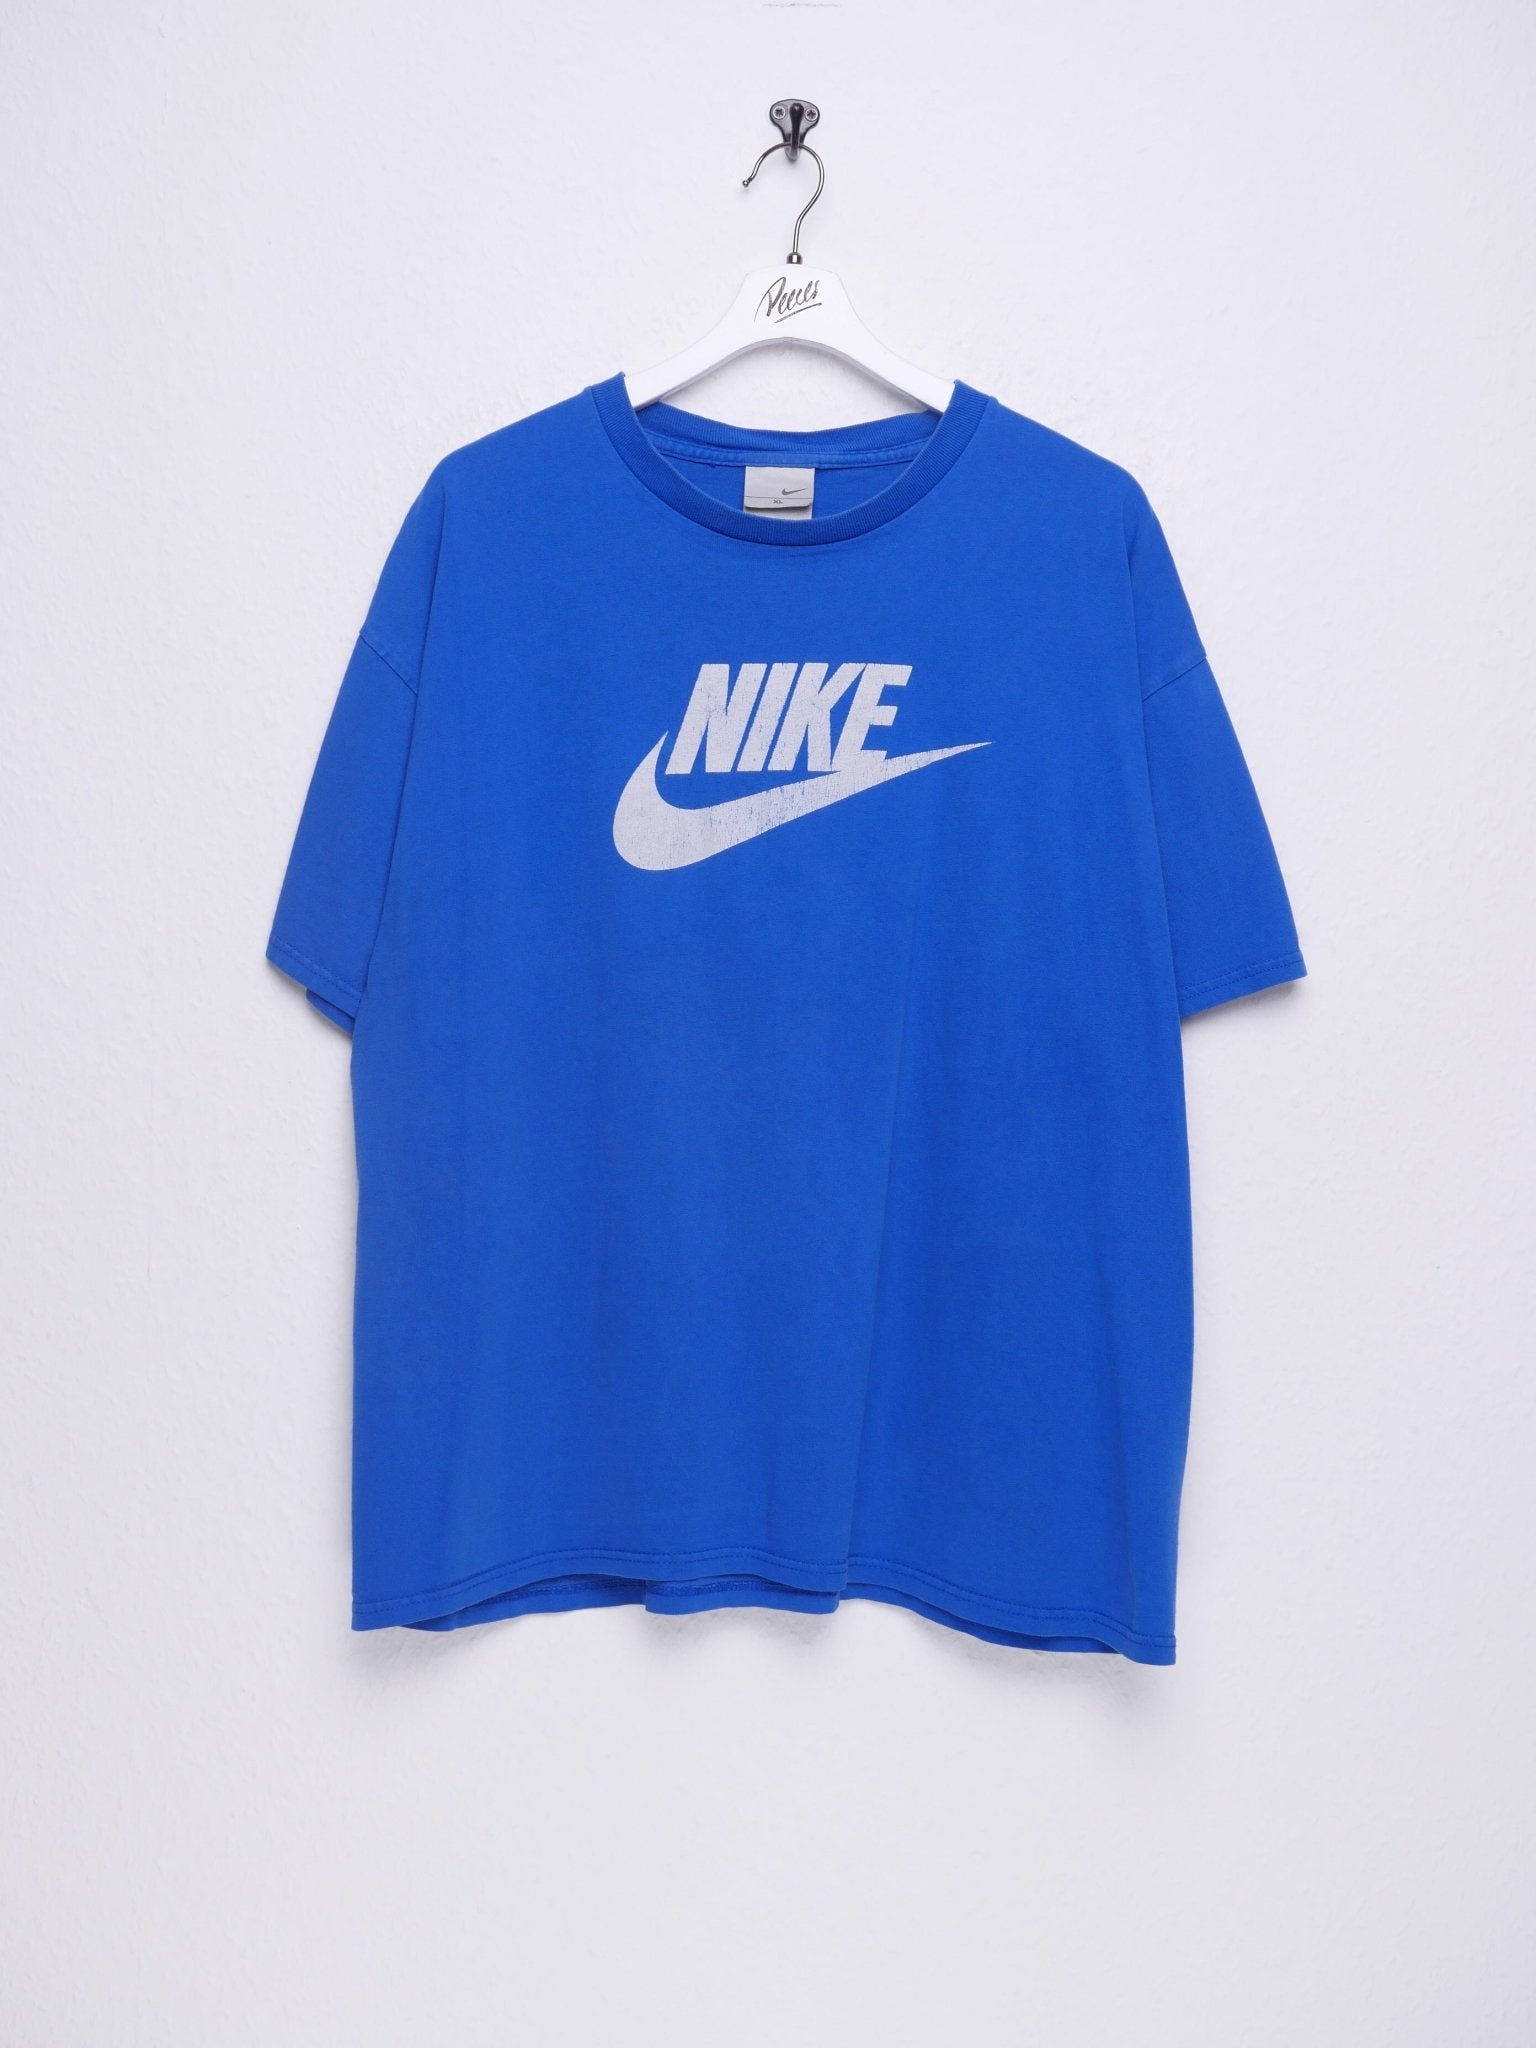 nike printed Logo blue Shirt - Peeces